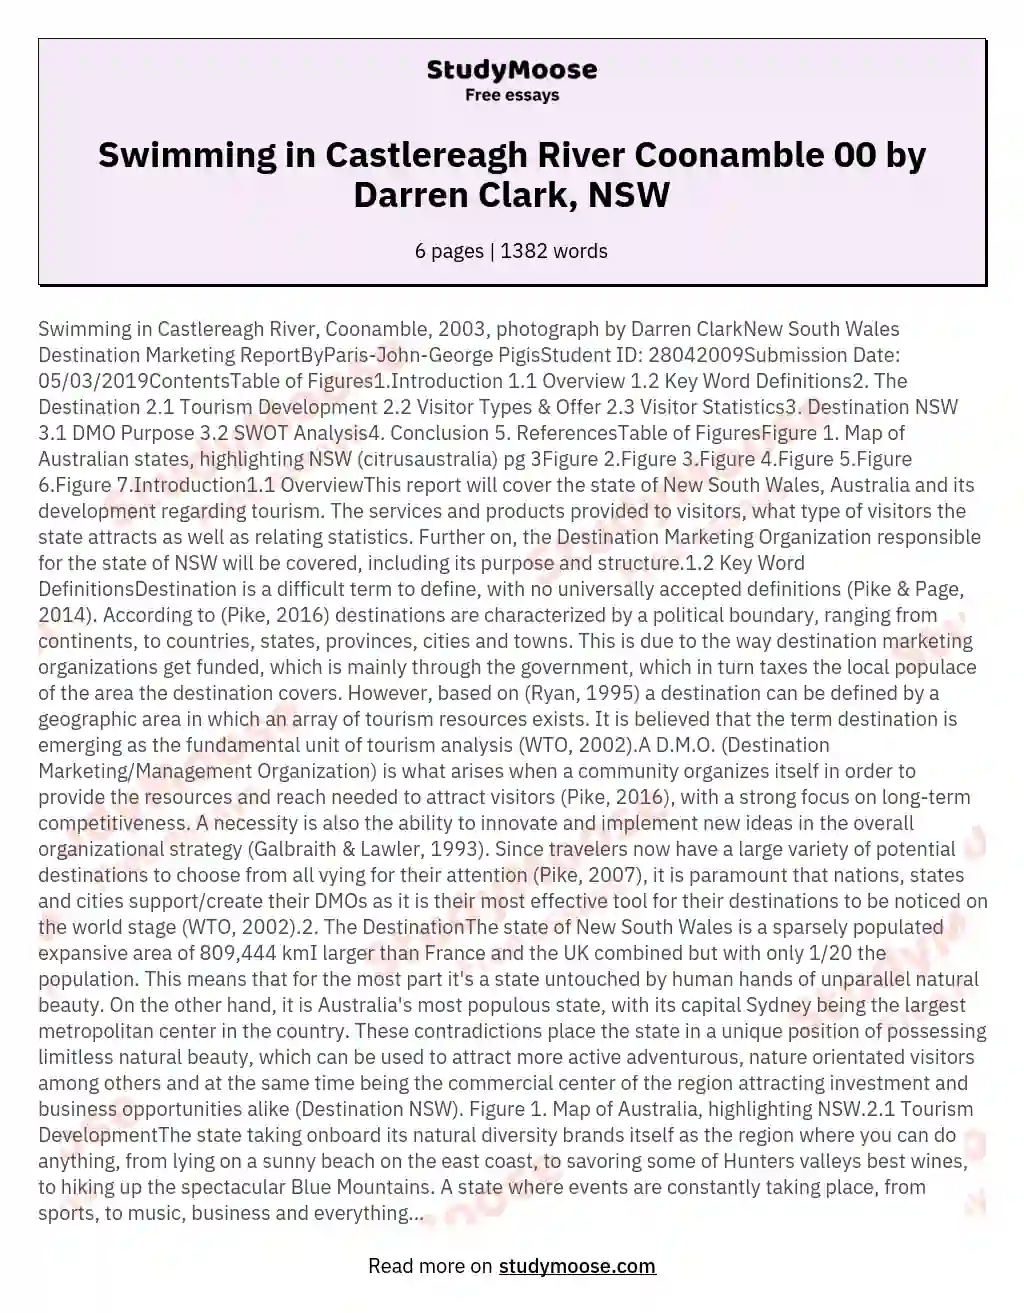 Swimming in Castlereagh River Coonamble 00 by Darren Clark, NSW essay